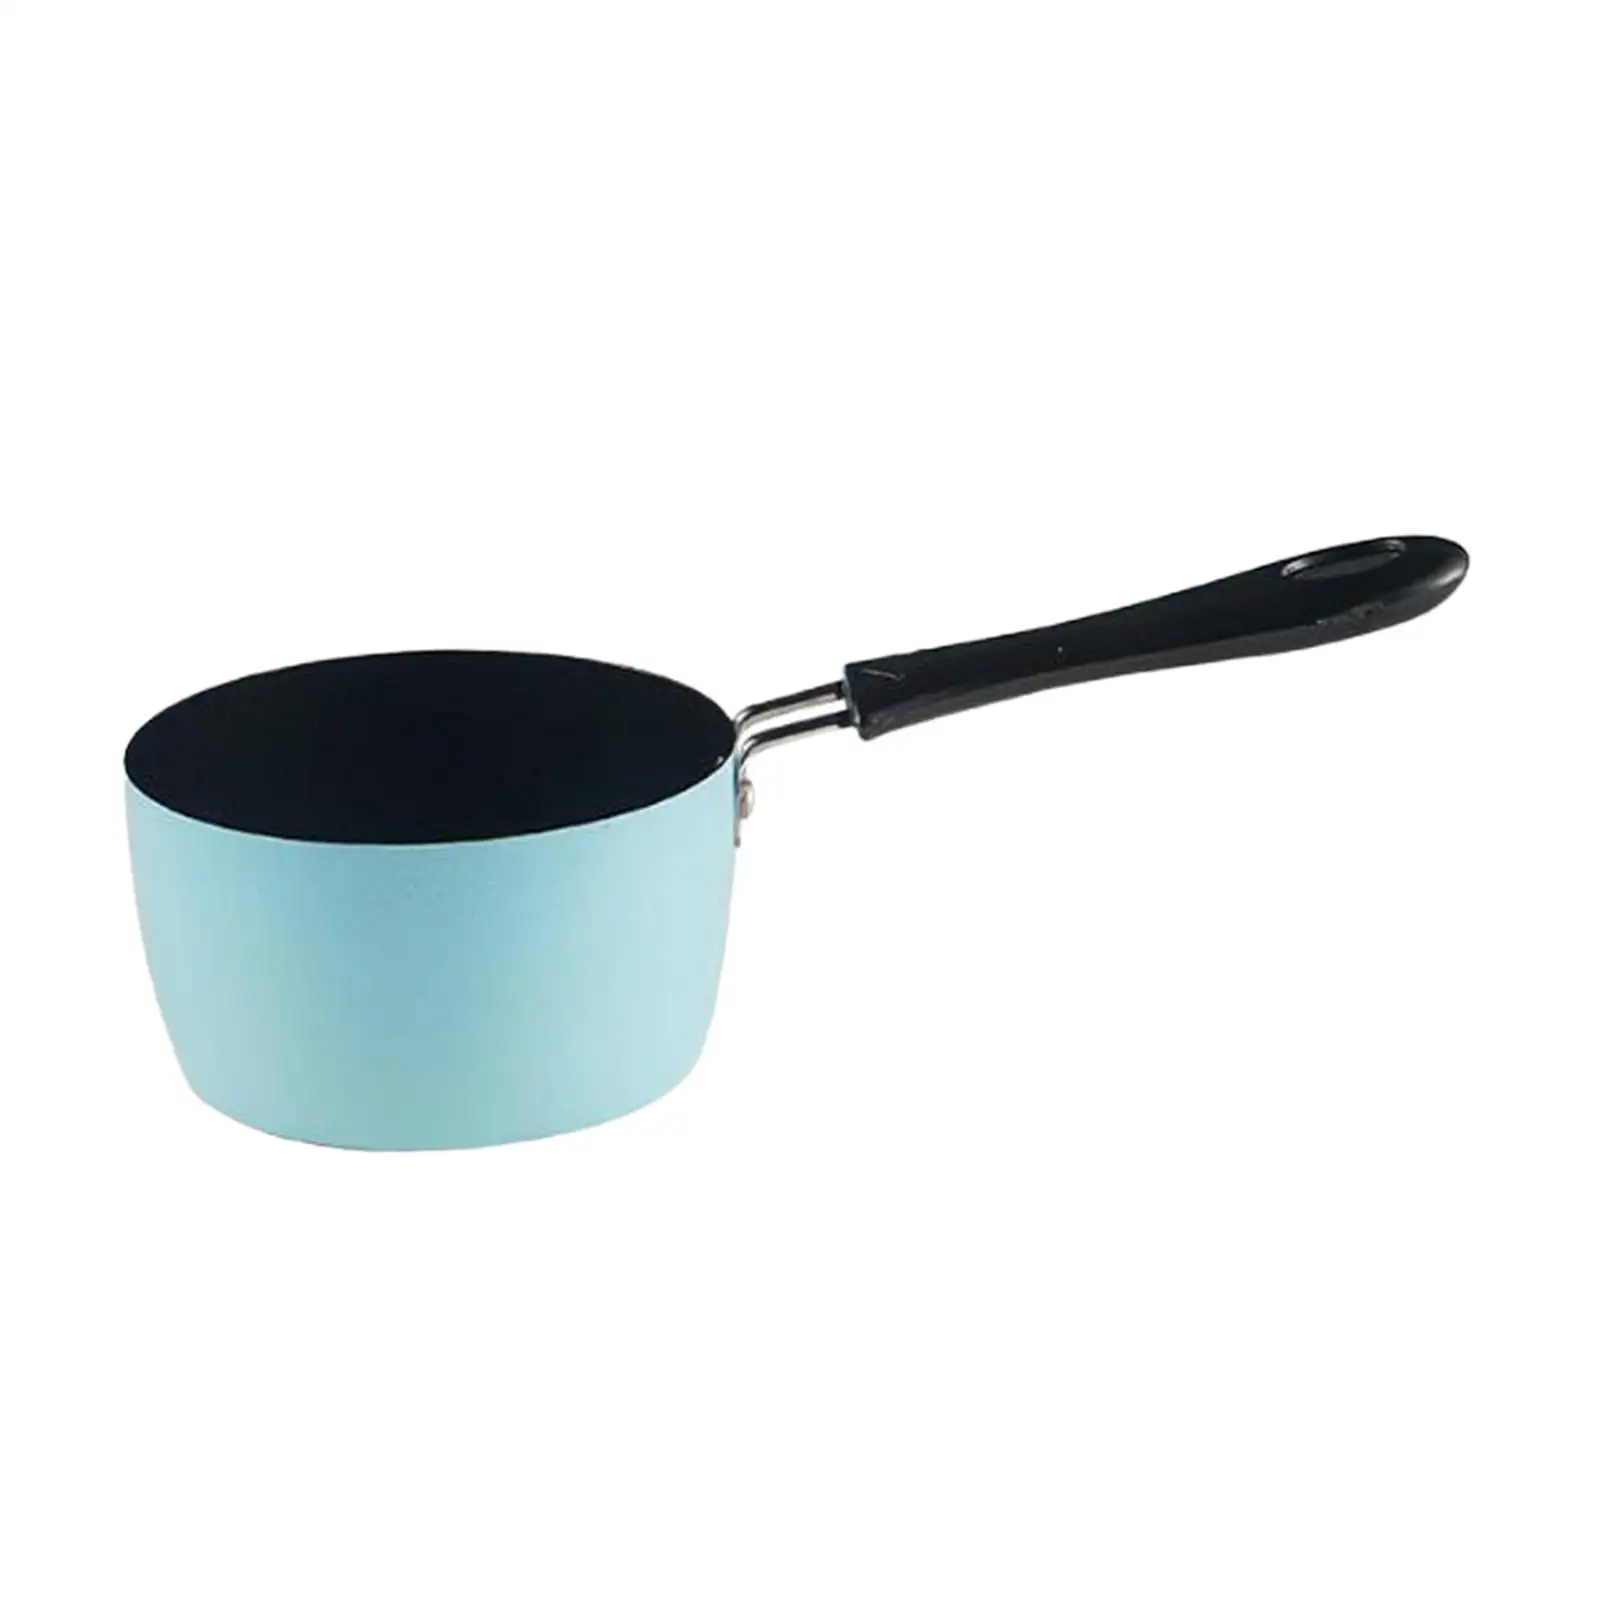 Milk Pan Porridge Cooking Pot Small Saucepan for Cooking Breakfast Home